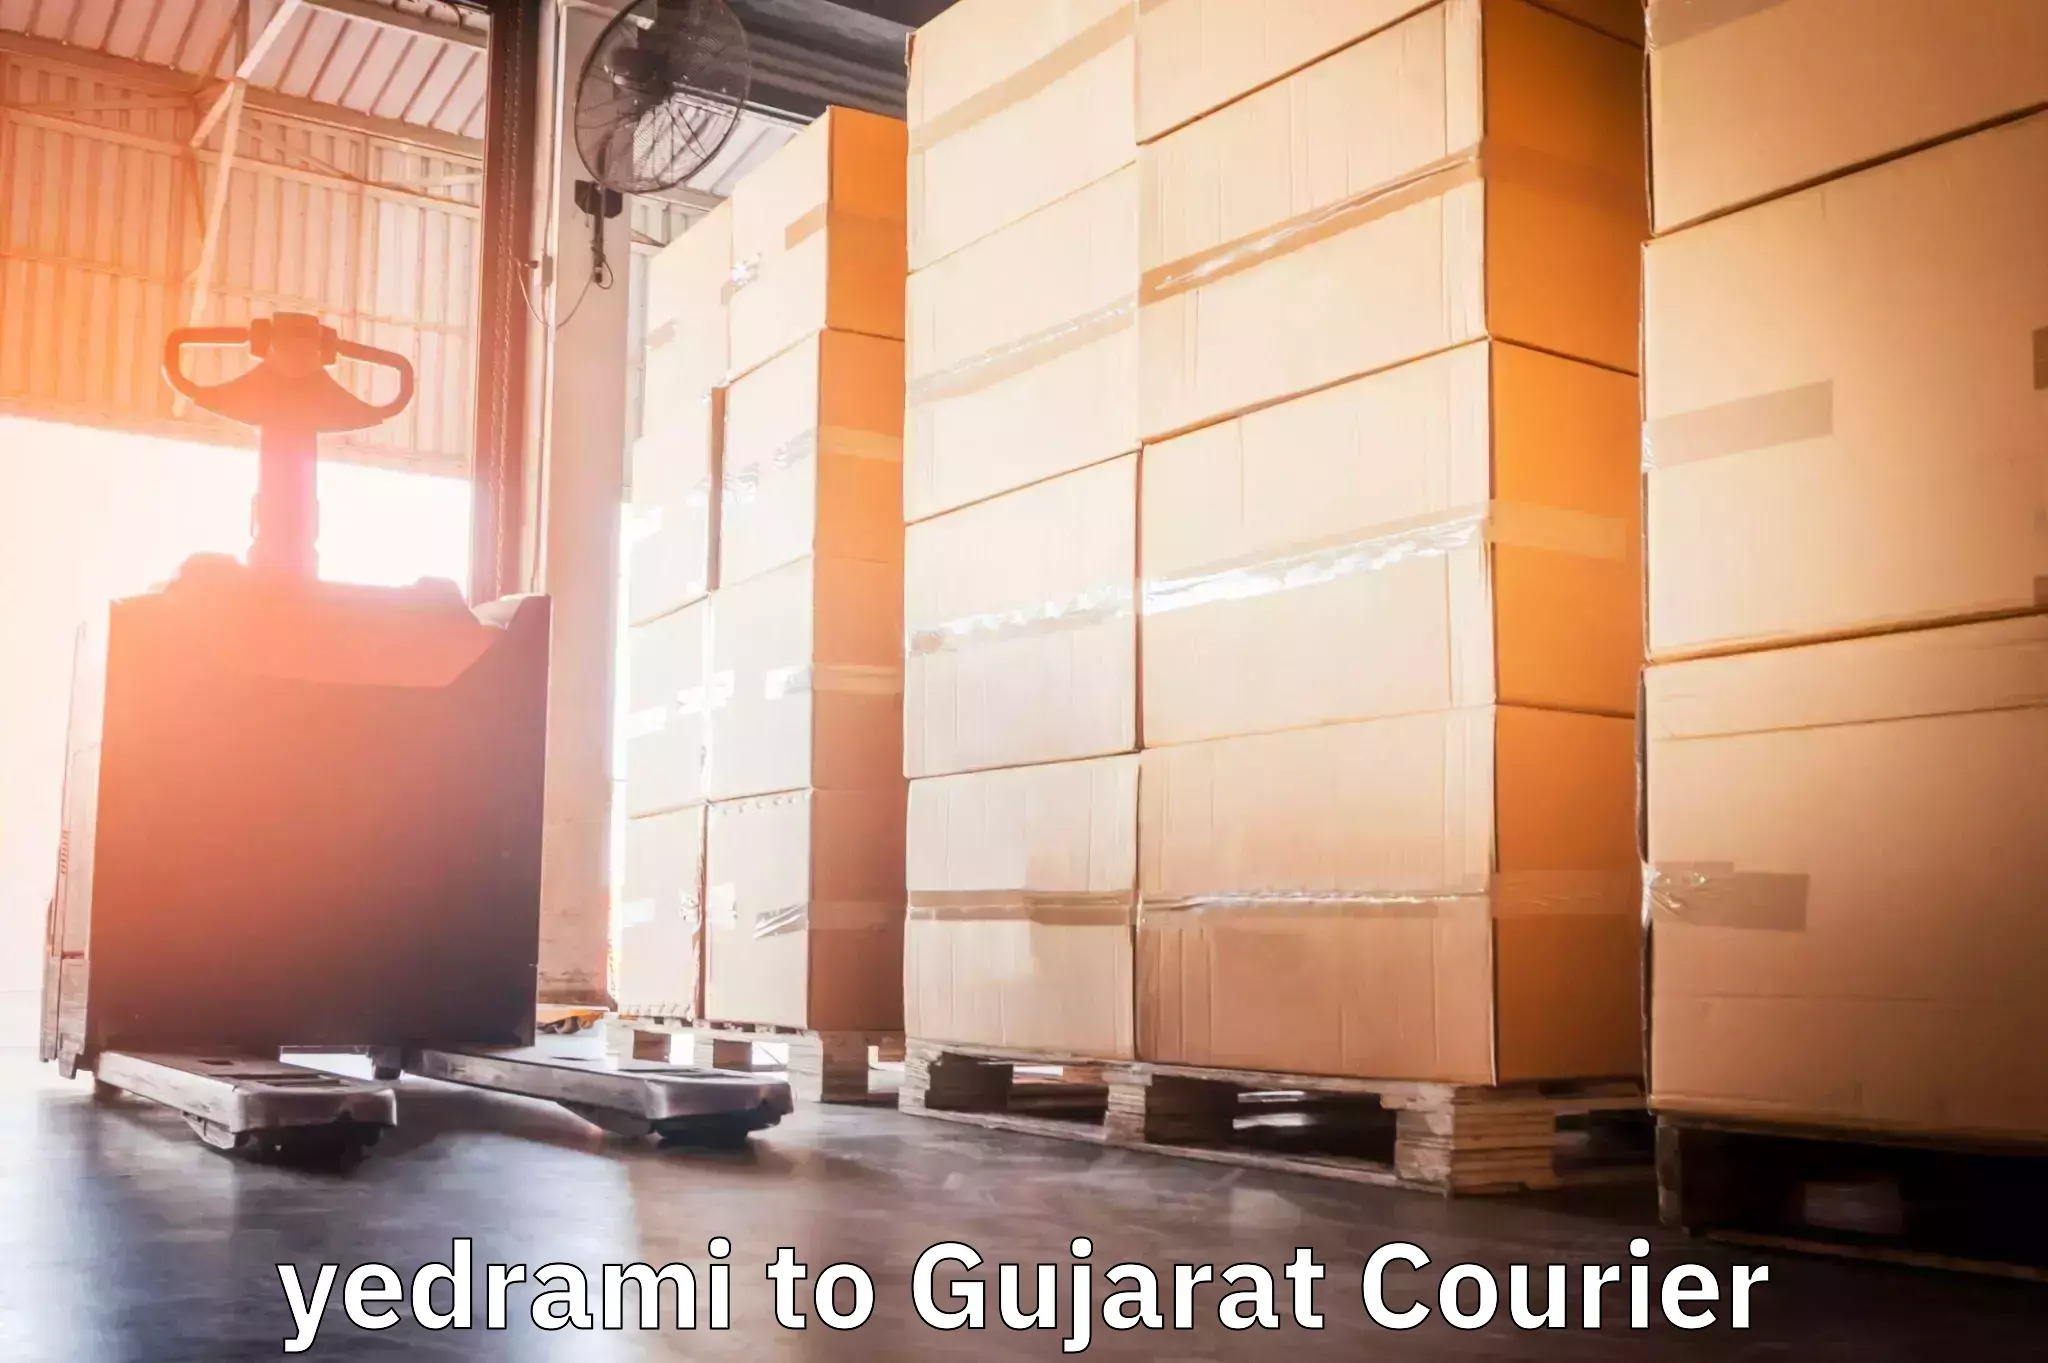 Global shipping networks yedrami to Gujarat